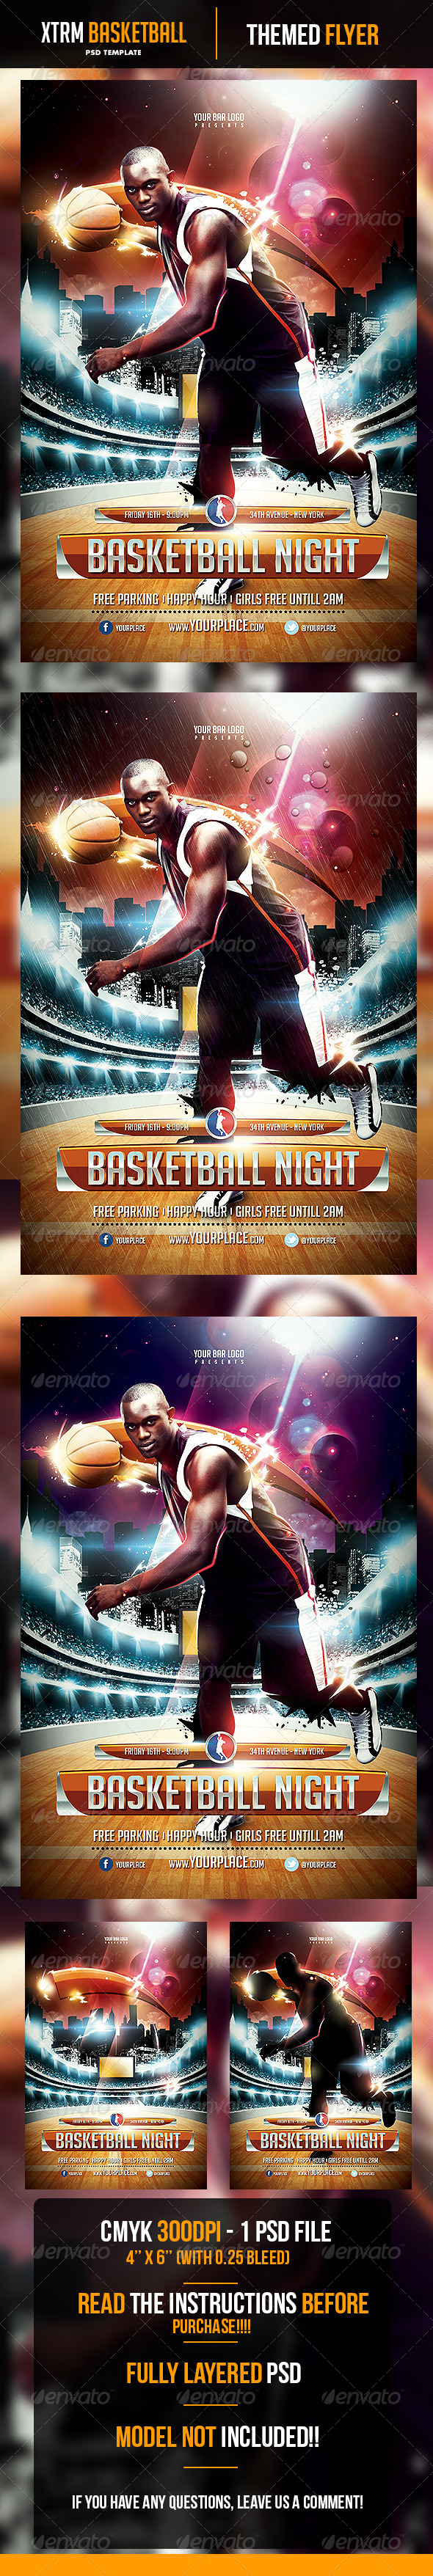 XTRM Basketball Night Flyer Template